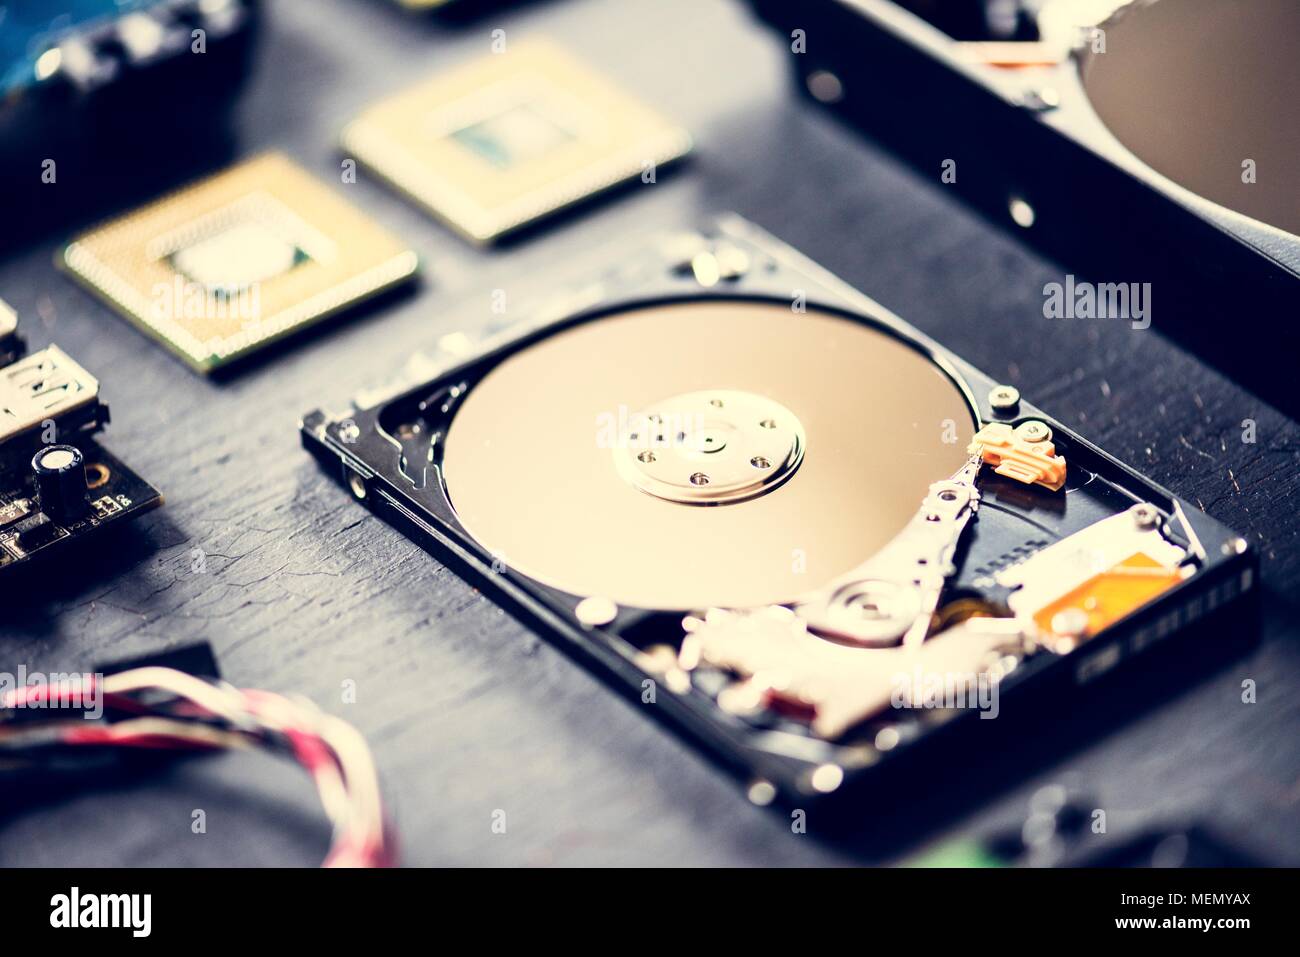 Closeup of computer hard disk drive Stock Photo